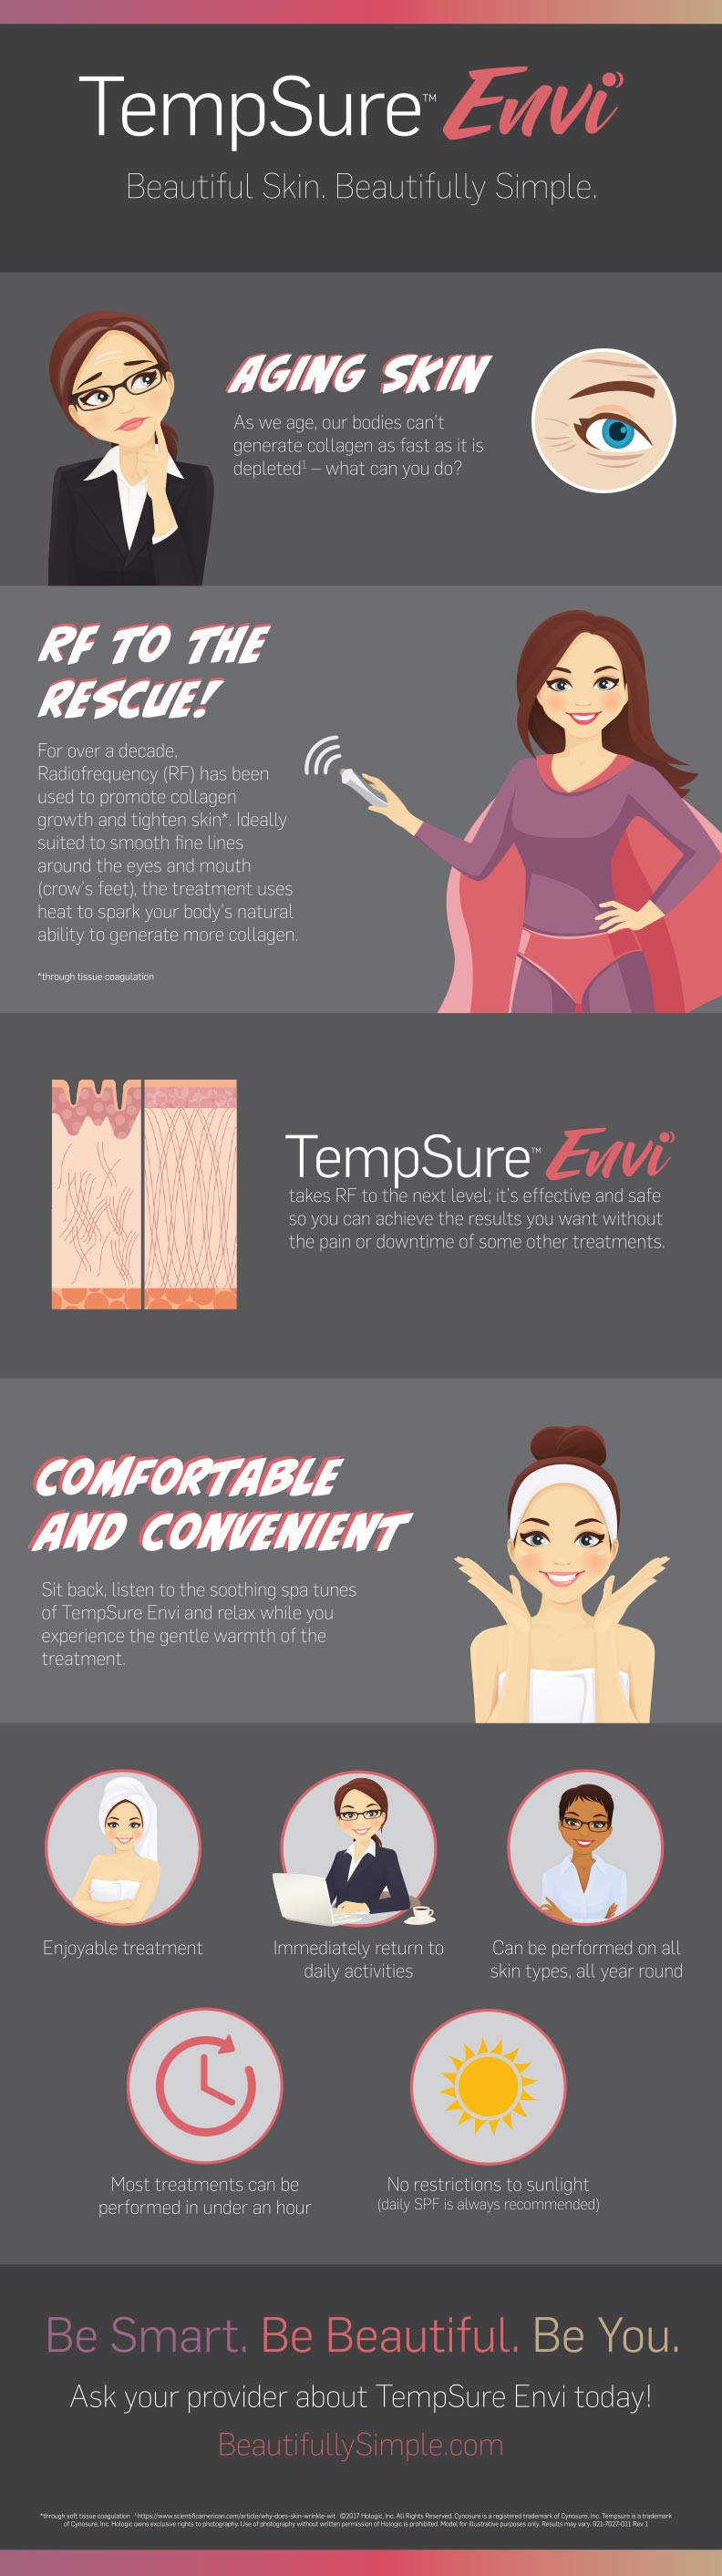 TempSure-Envi-Infographic